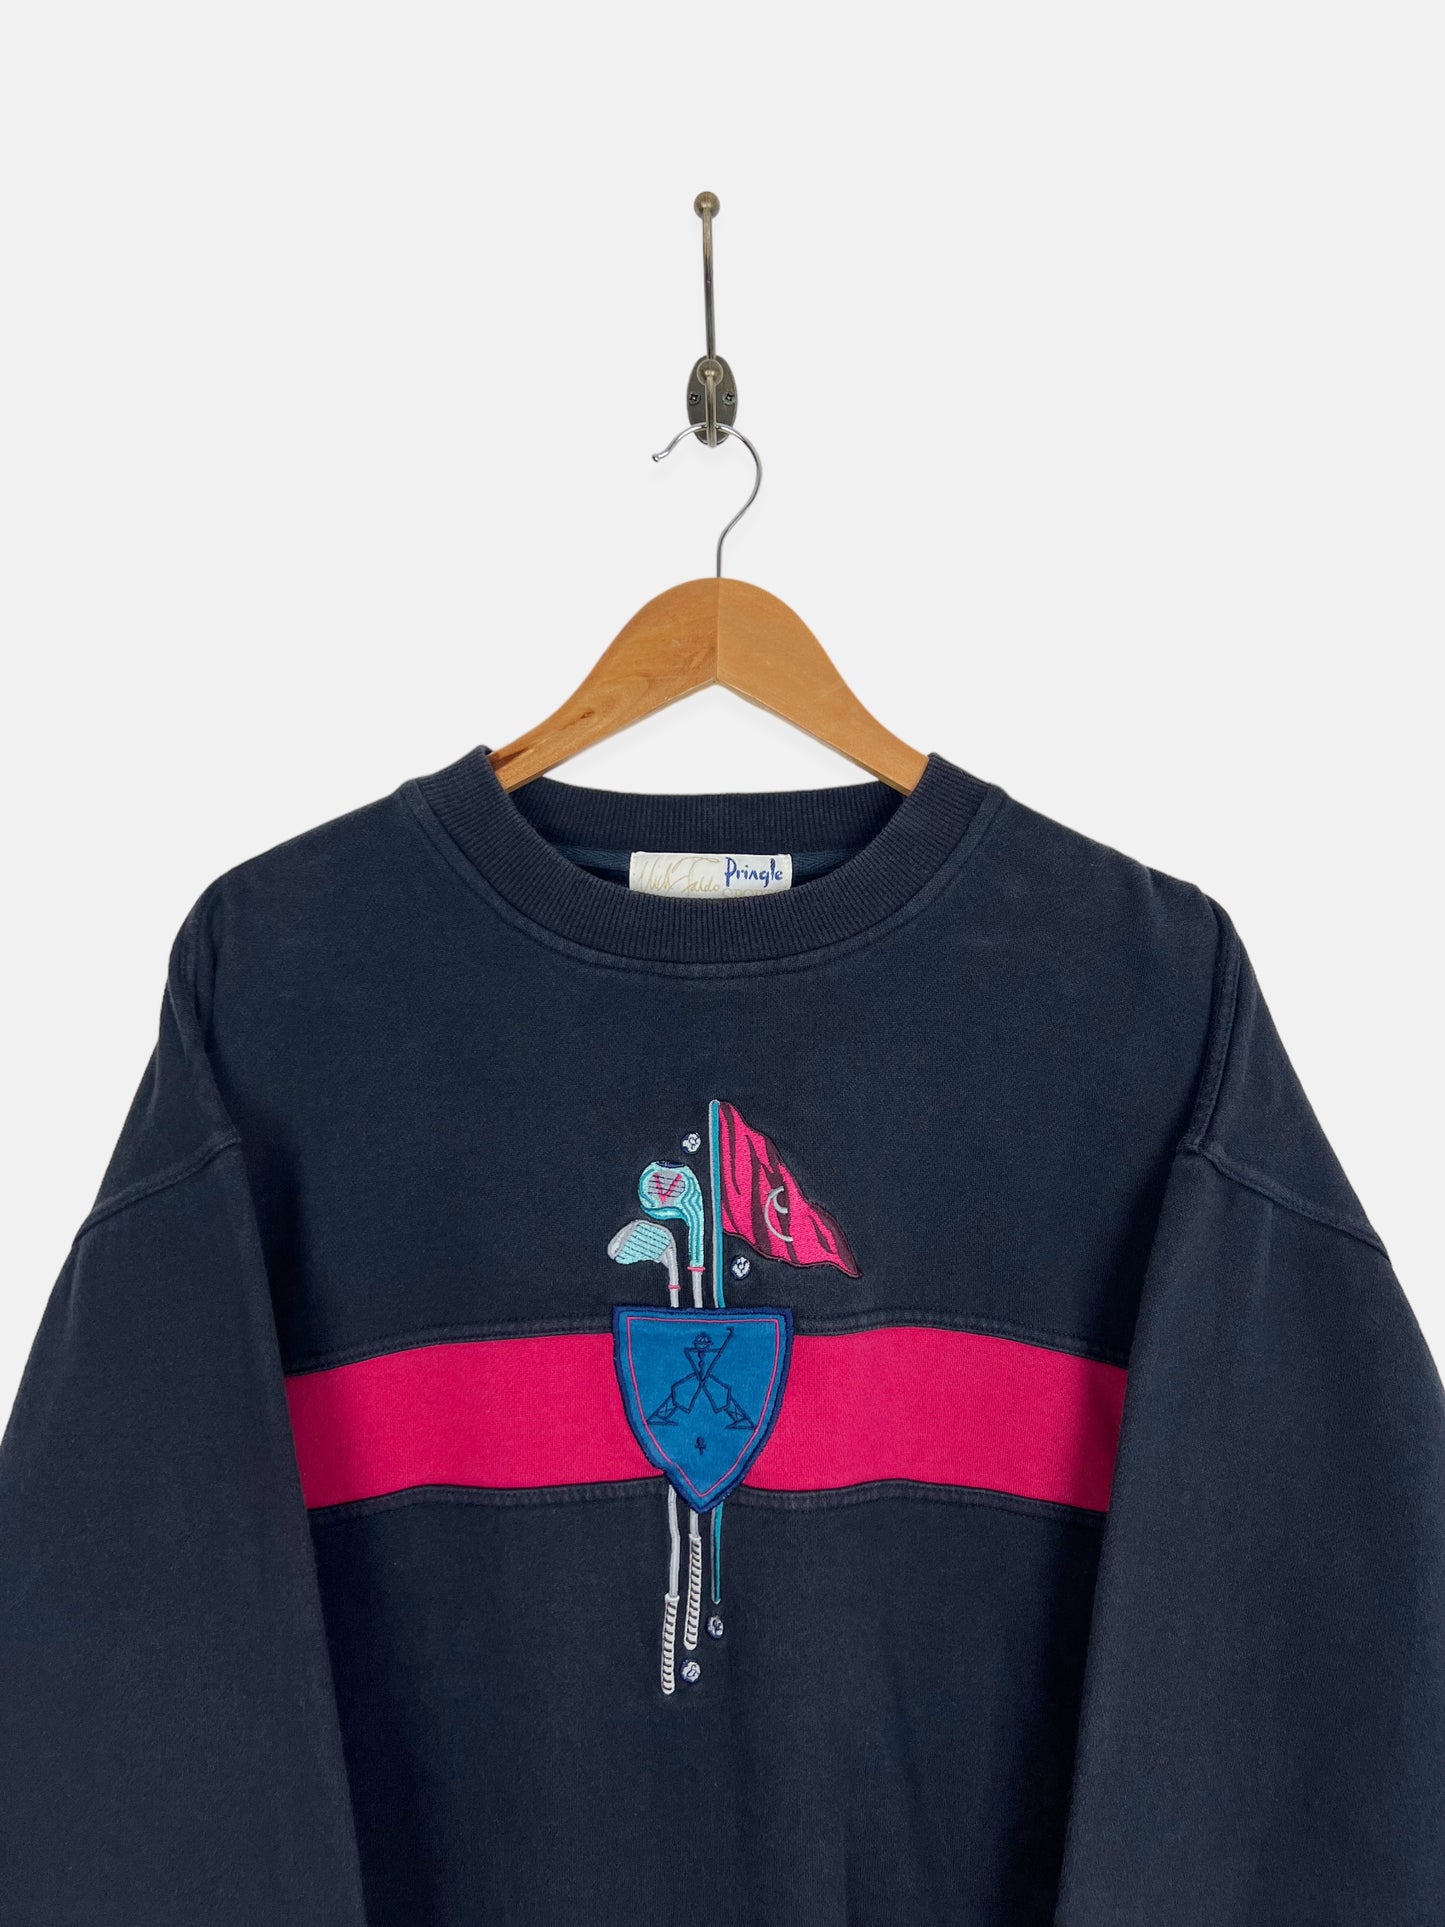 90's Golf Embroidered Vintage Sweatshirt Size M